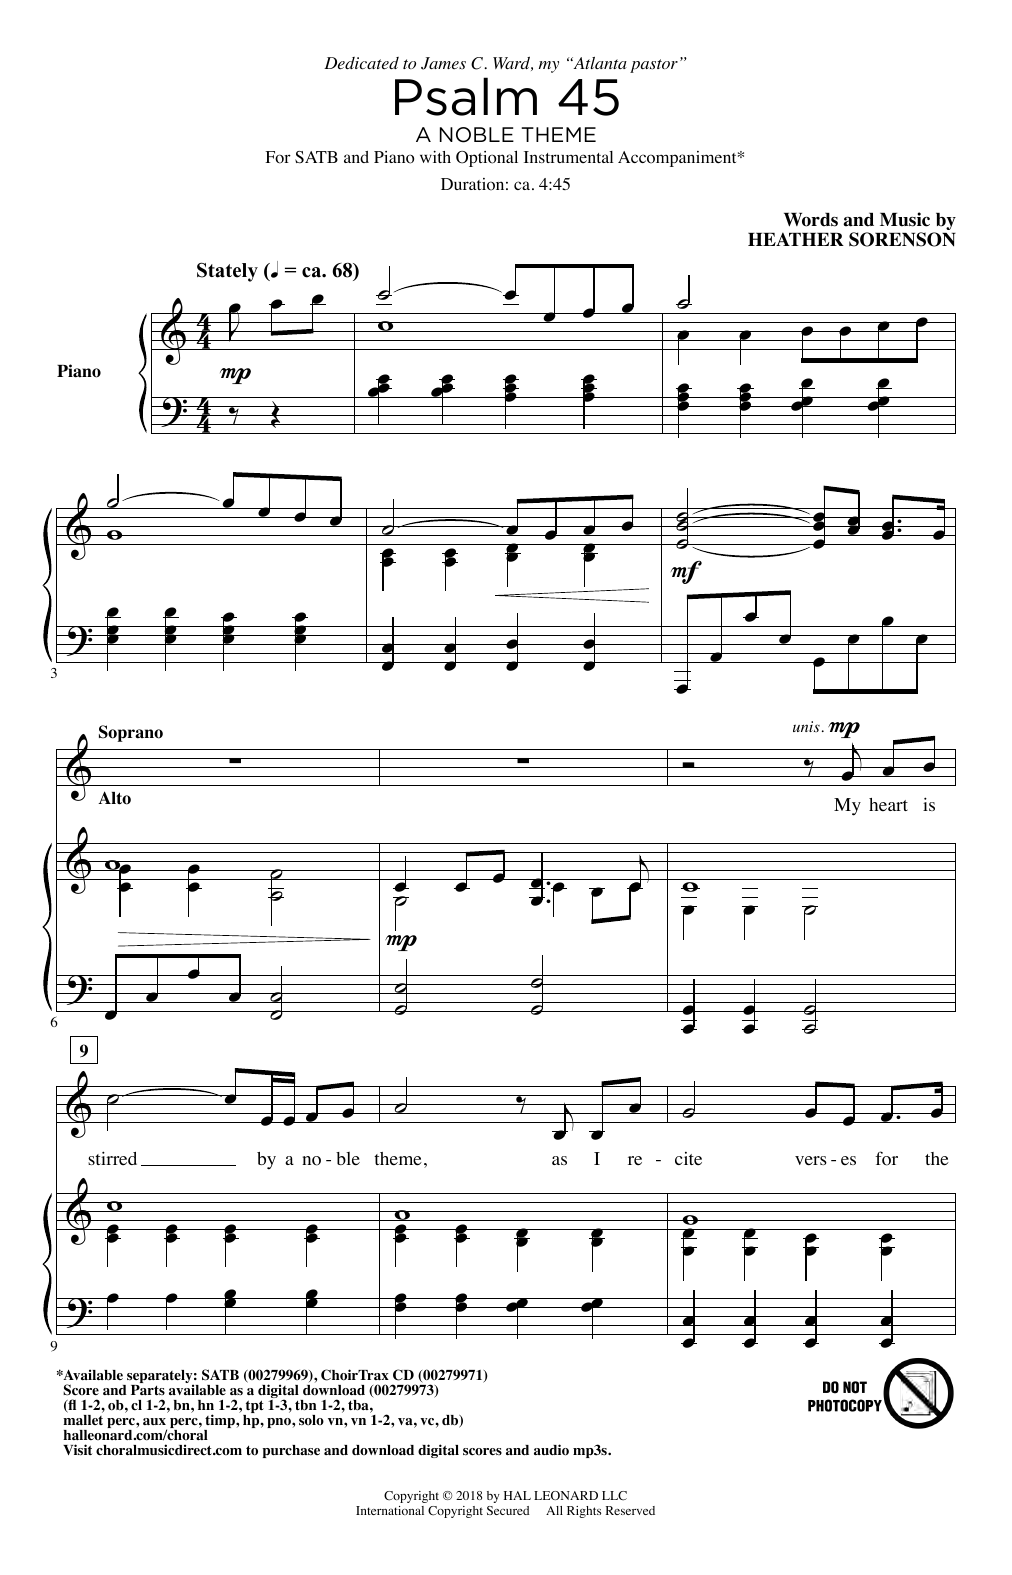 Download Heather Sorenson Psalm 45 (A Noble Theme) Sheet Music